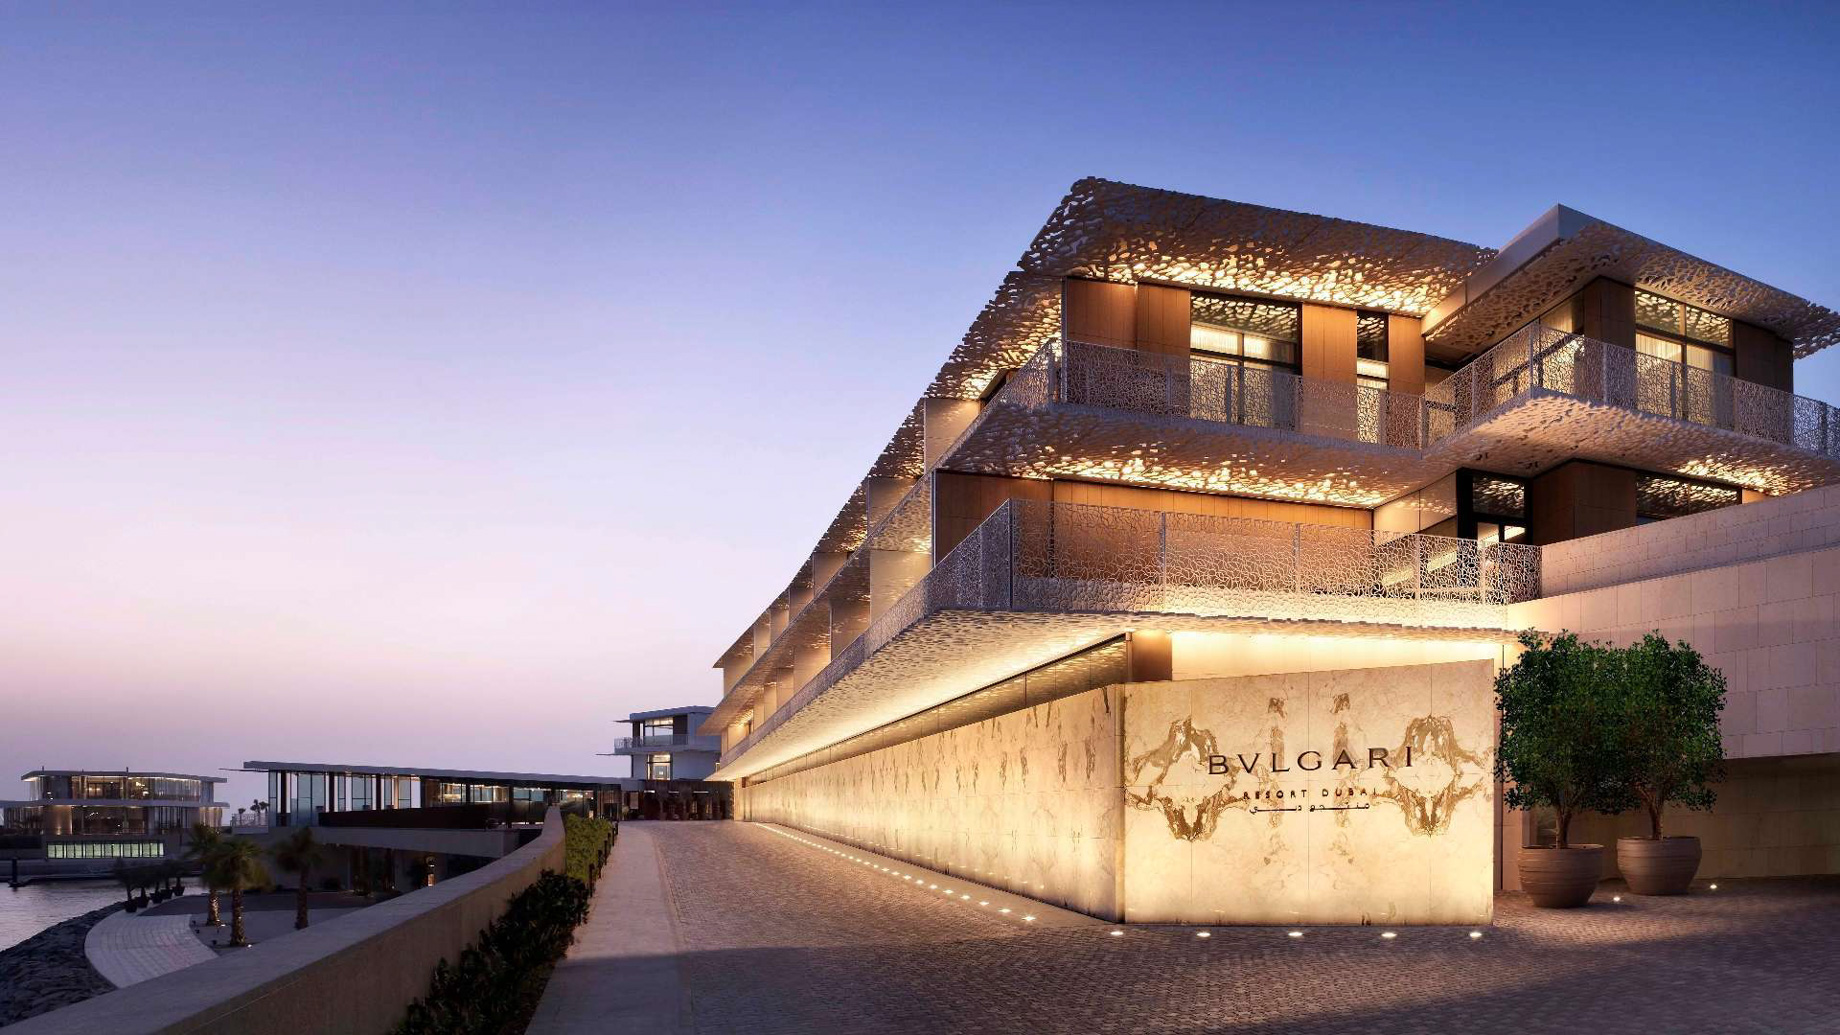 Bvlgari Resort Dubai – Jumeira Bay Island, Dubai, UAE – Resort Entrance at Dusk